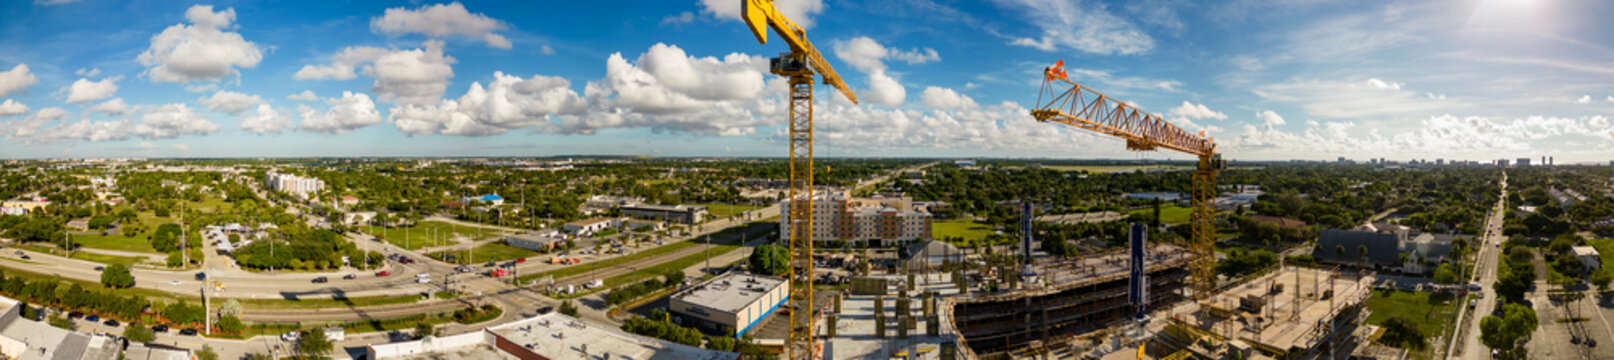 Aerial panorama of a construction site Pompano Beach FL